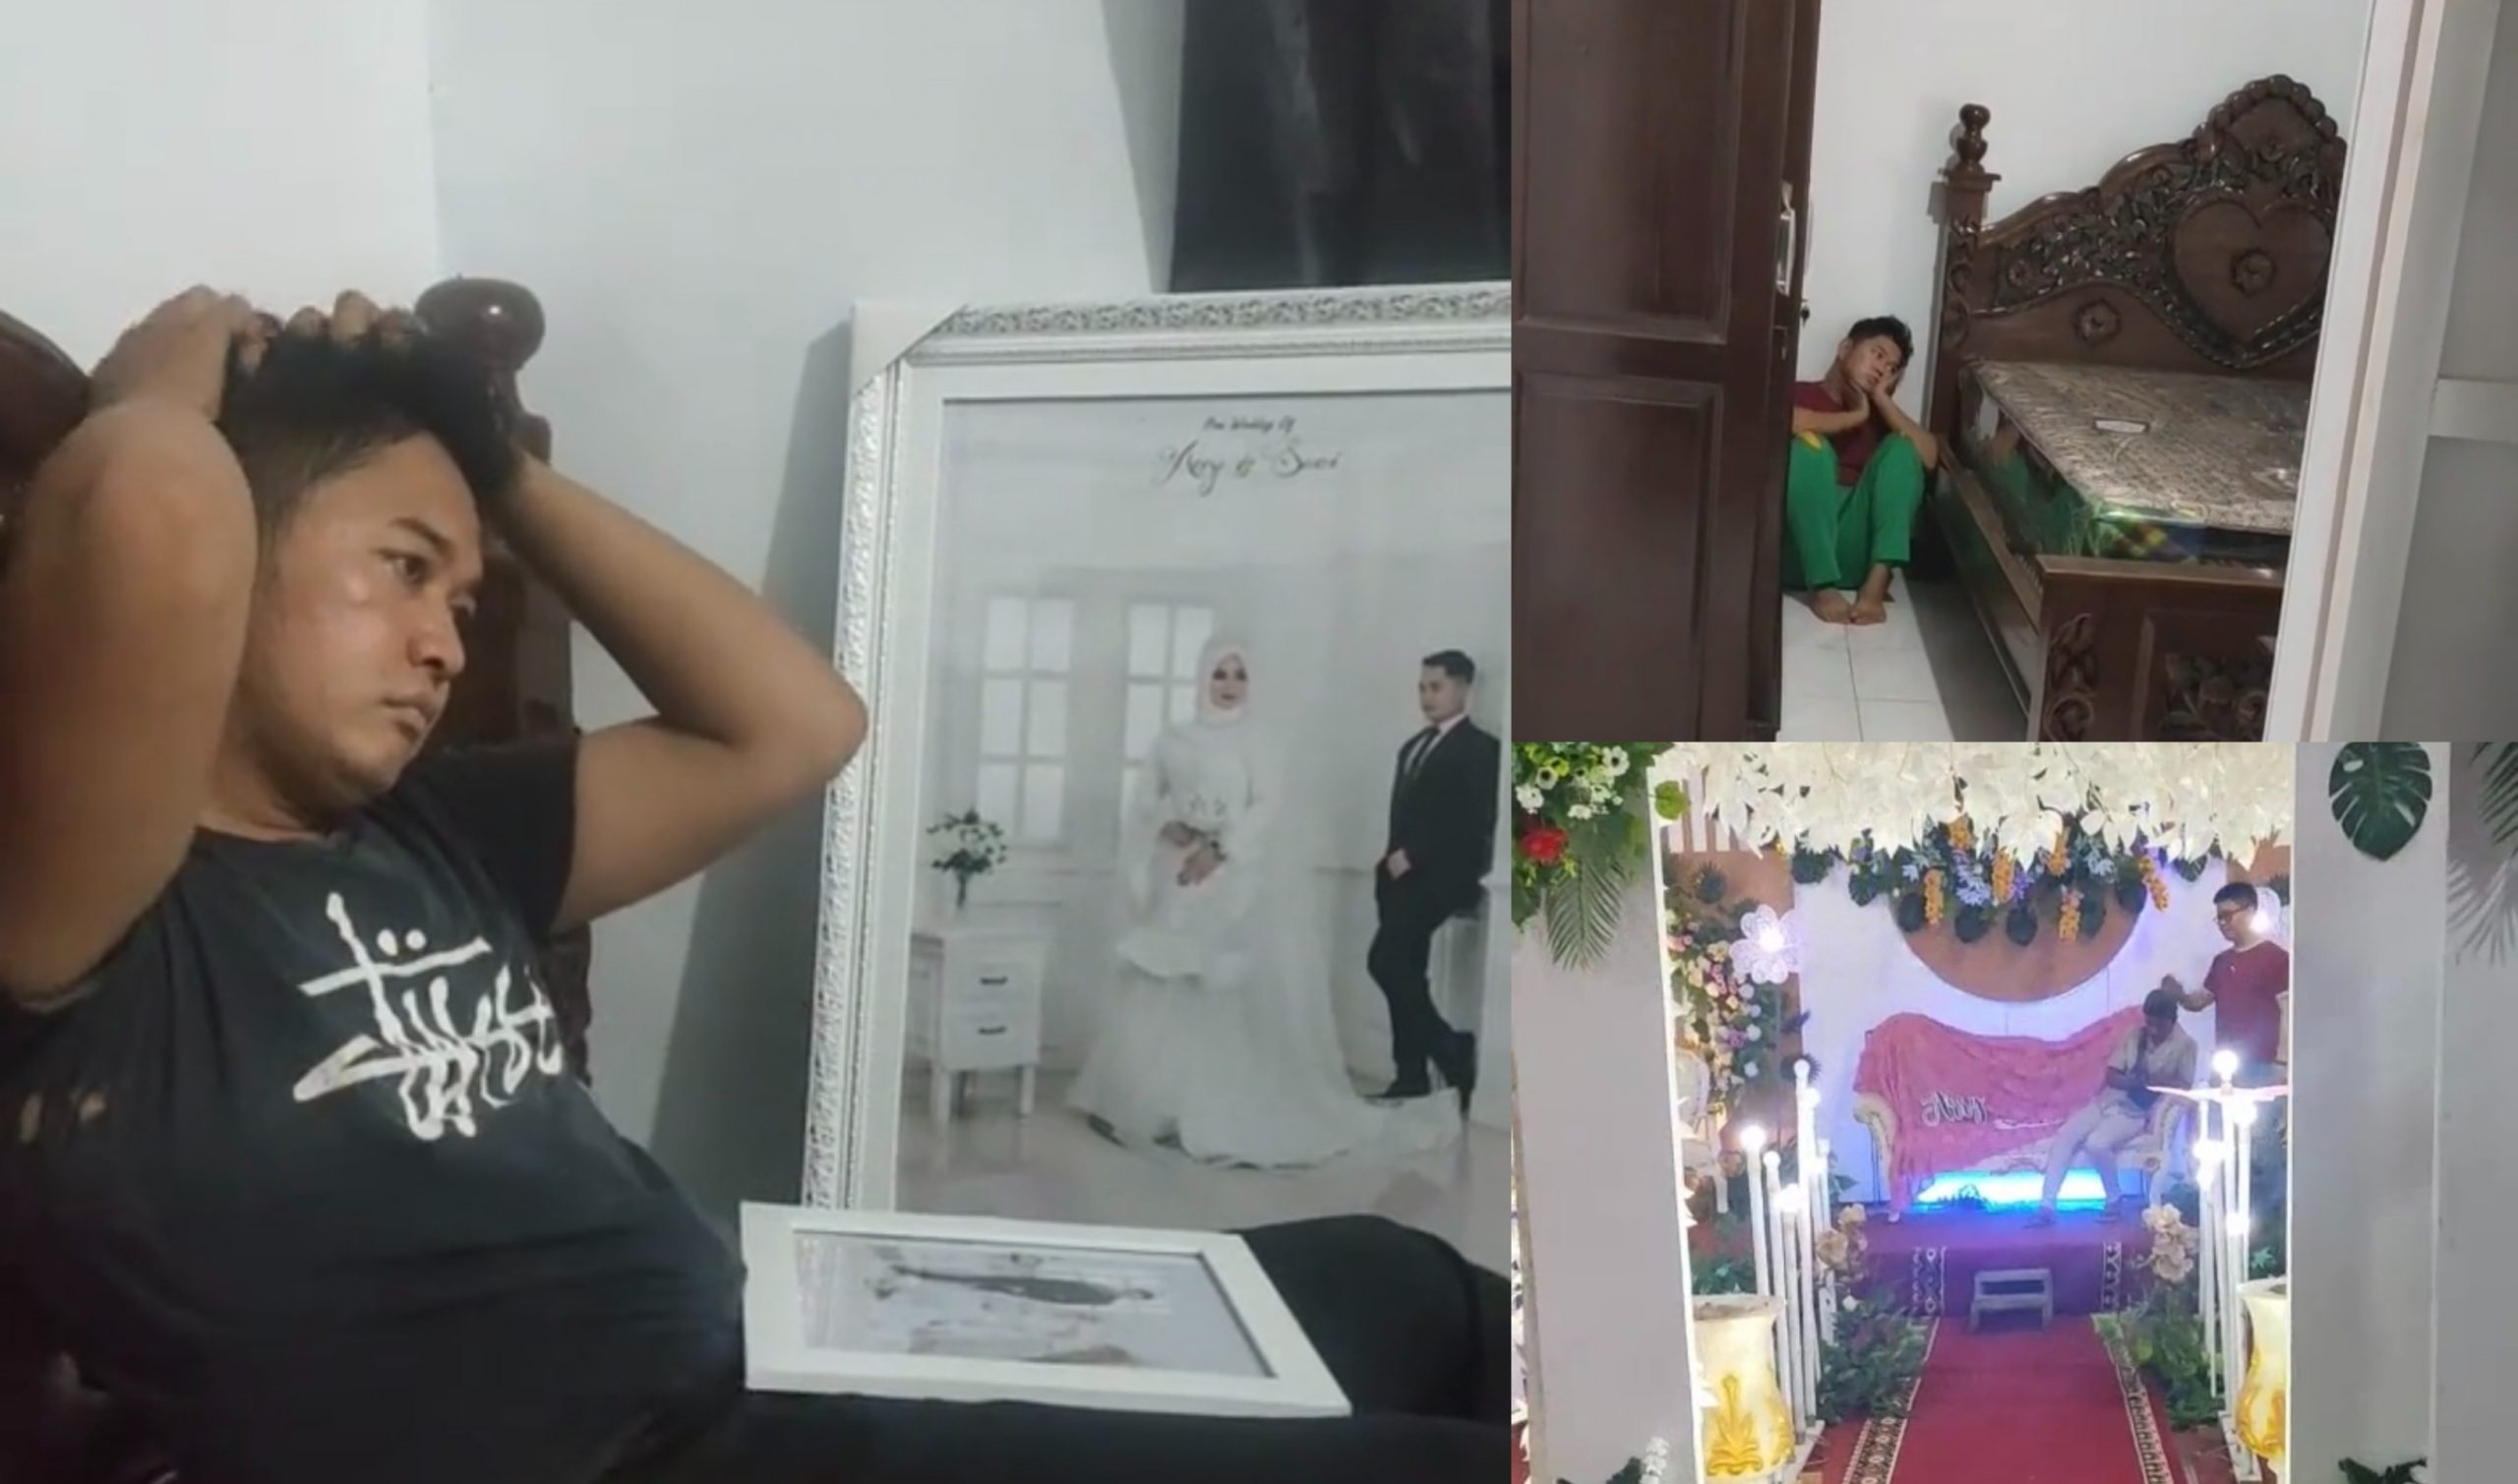 [VIDEO] Alami Kemurungan Tak Jadi Kahwin, Lelaki Habiskan Masa Termenung Tatap Foto ‘Pre Wedding’